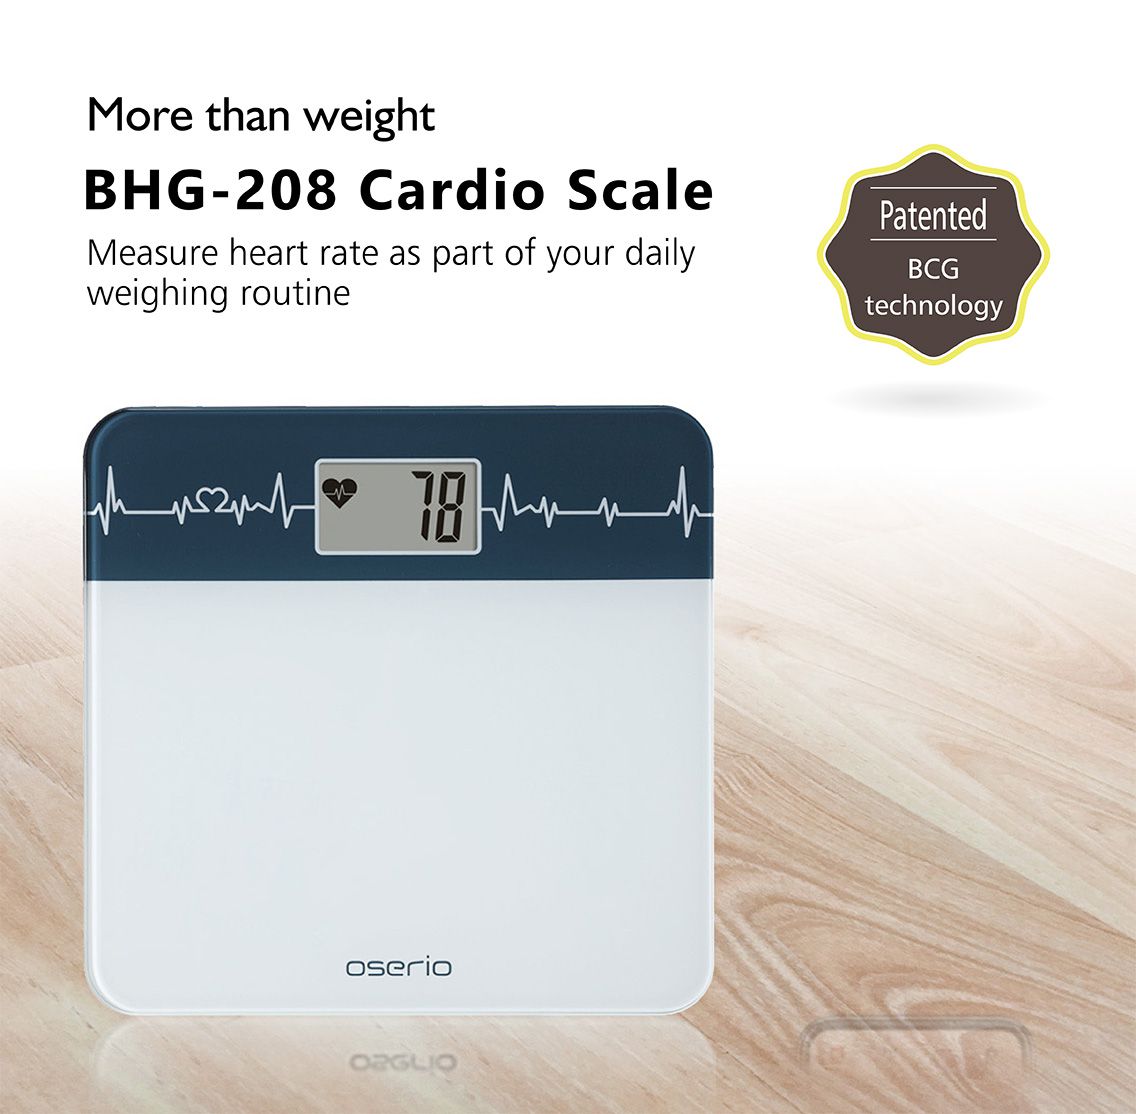 BHG-208 Cardio Scale